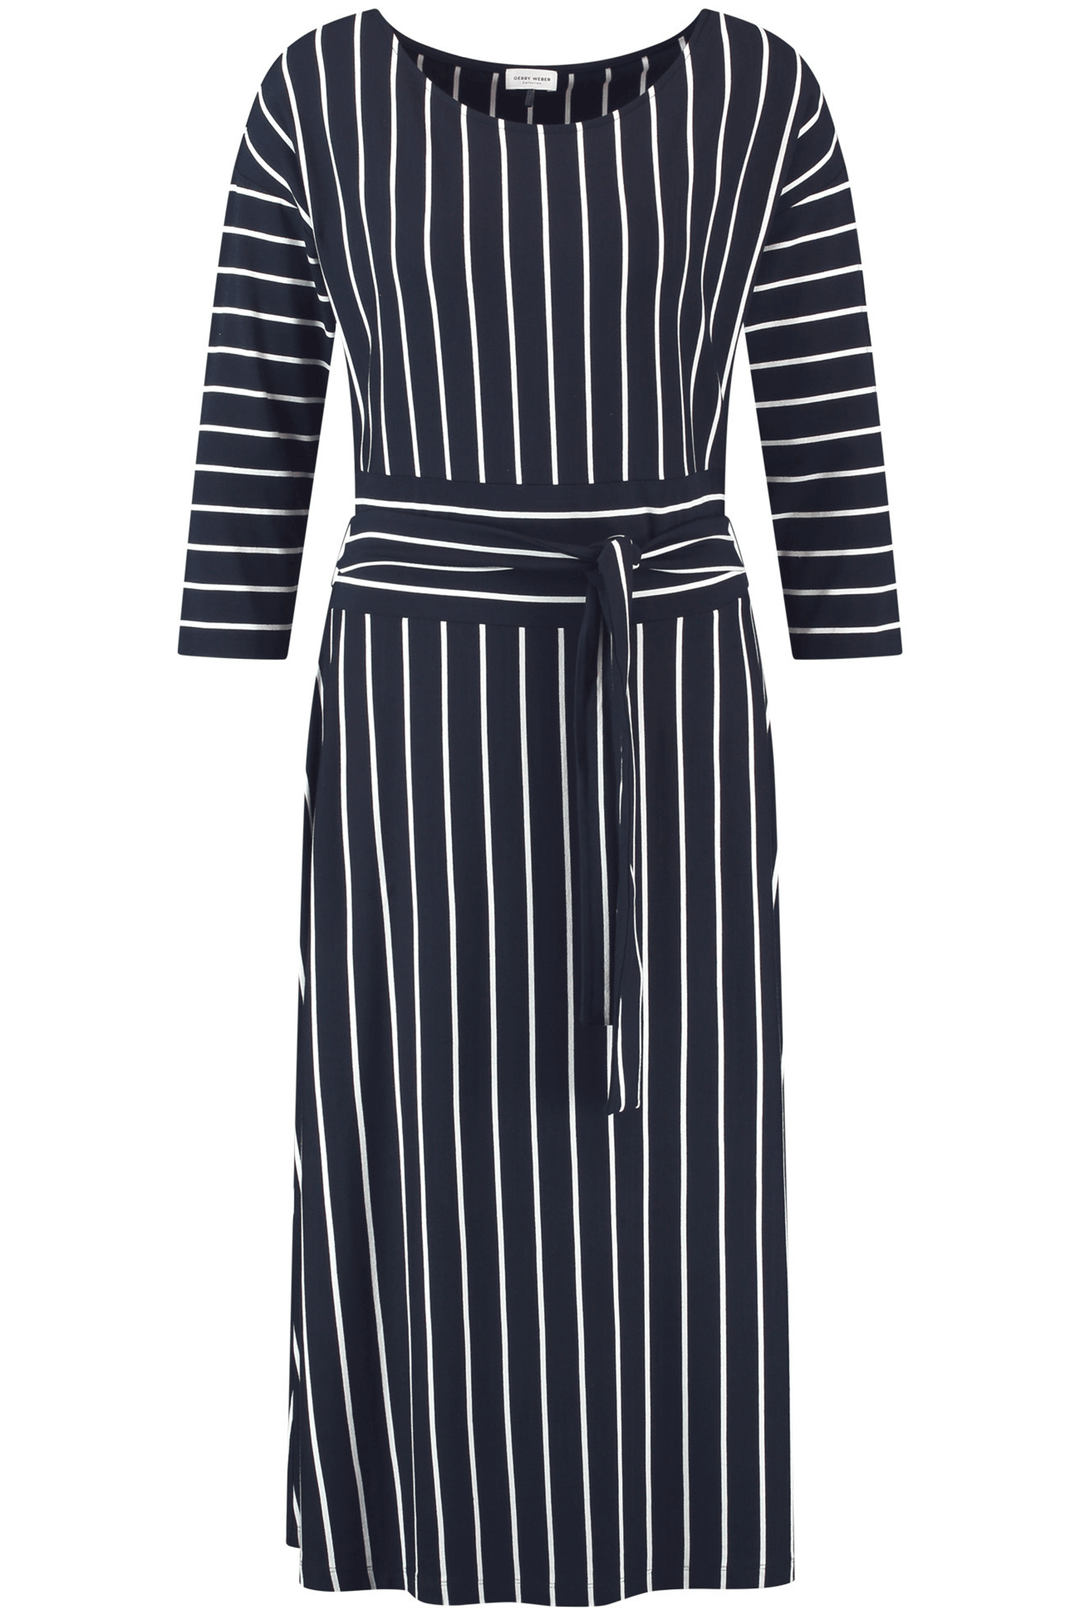 Gerry Weber 98053-35025 8092 Navy White Striped Dress - Shirley Allum Boutique